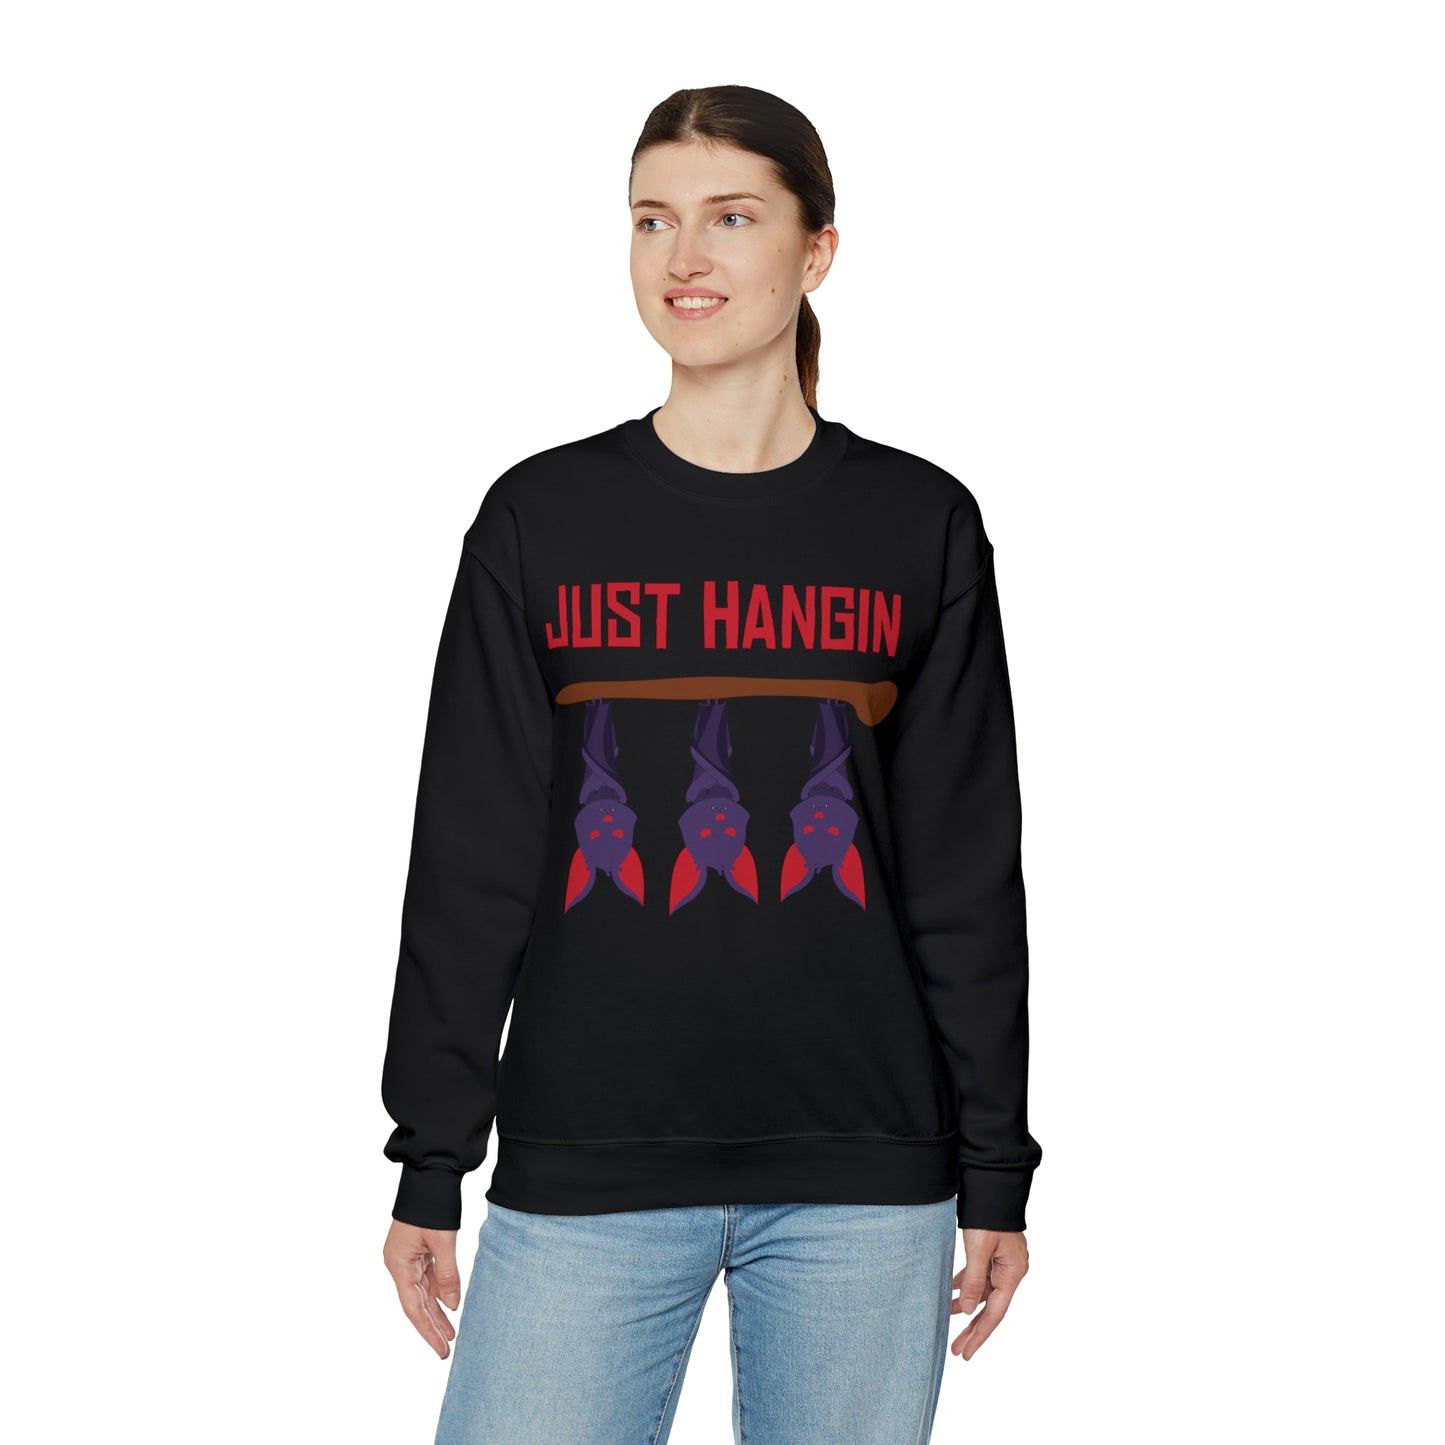 Just Hangin' Bats Crewneck Sweatshirt Top by The Dark Side of Fashion